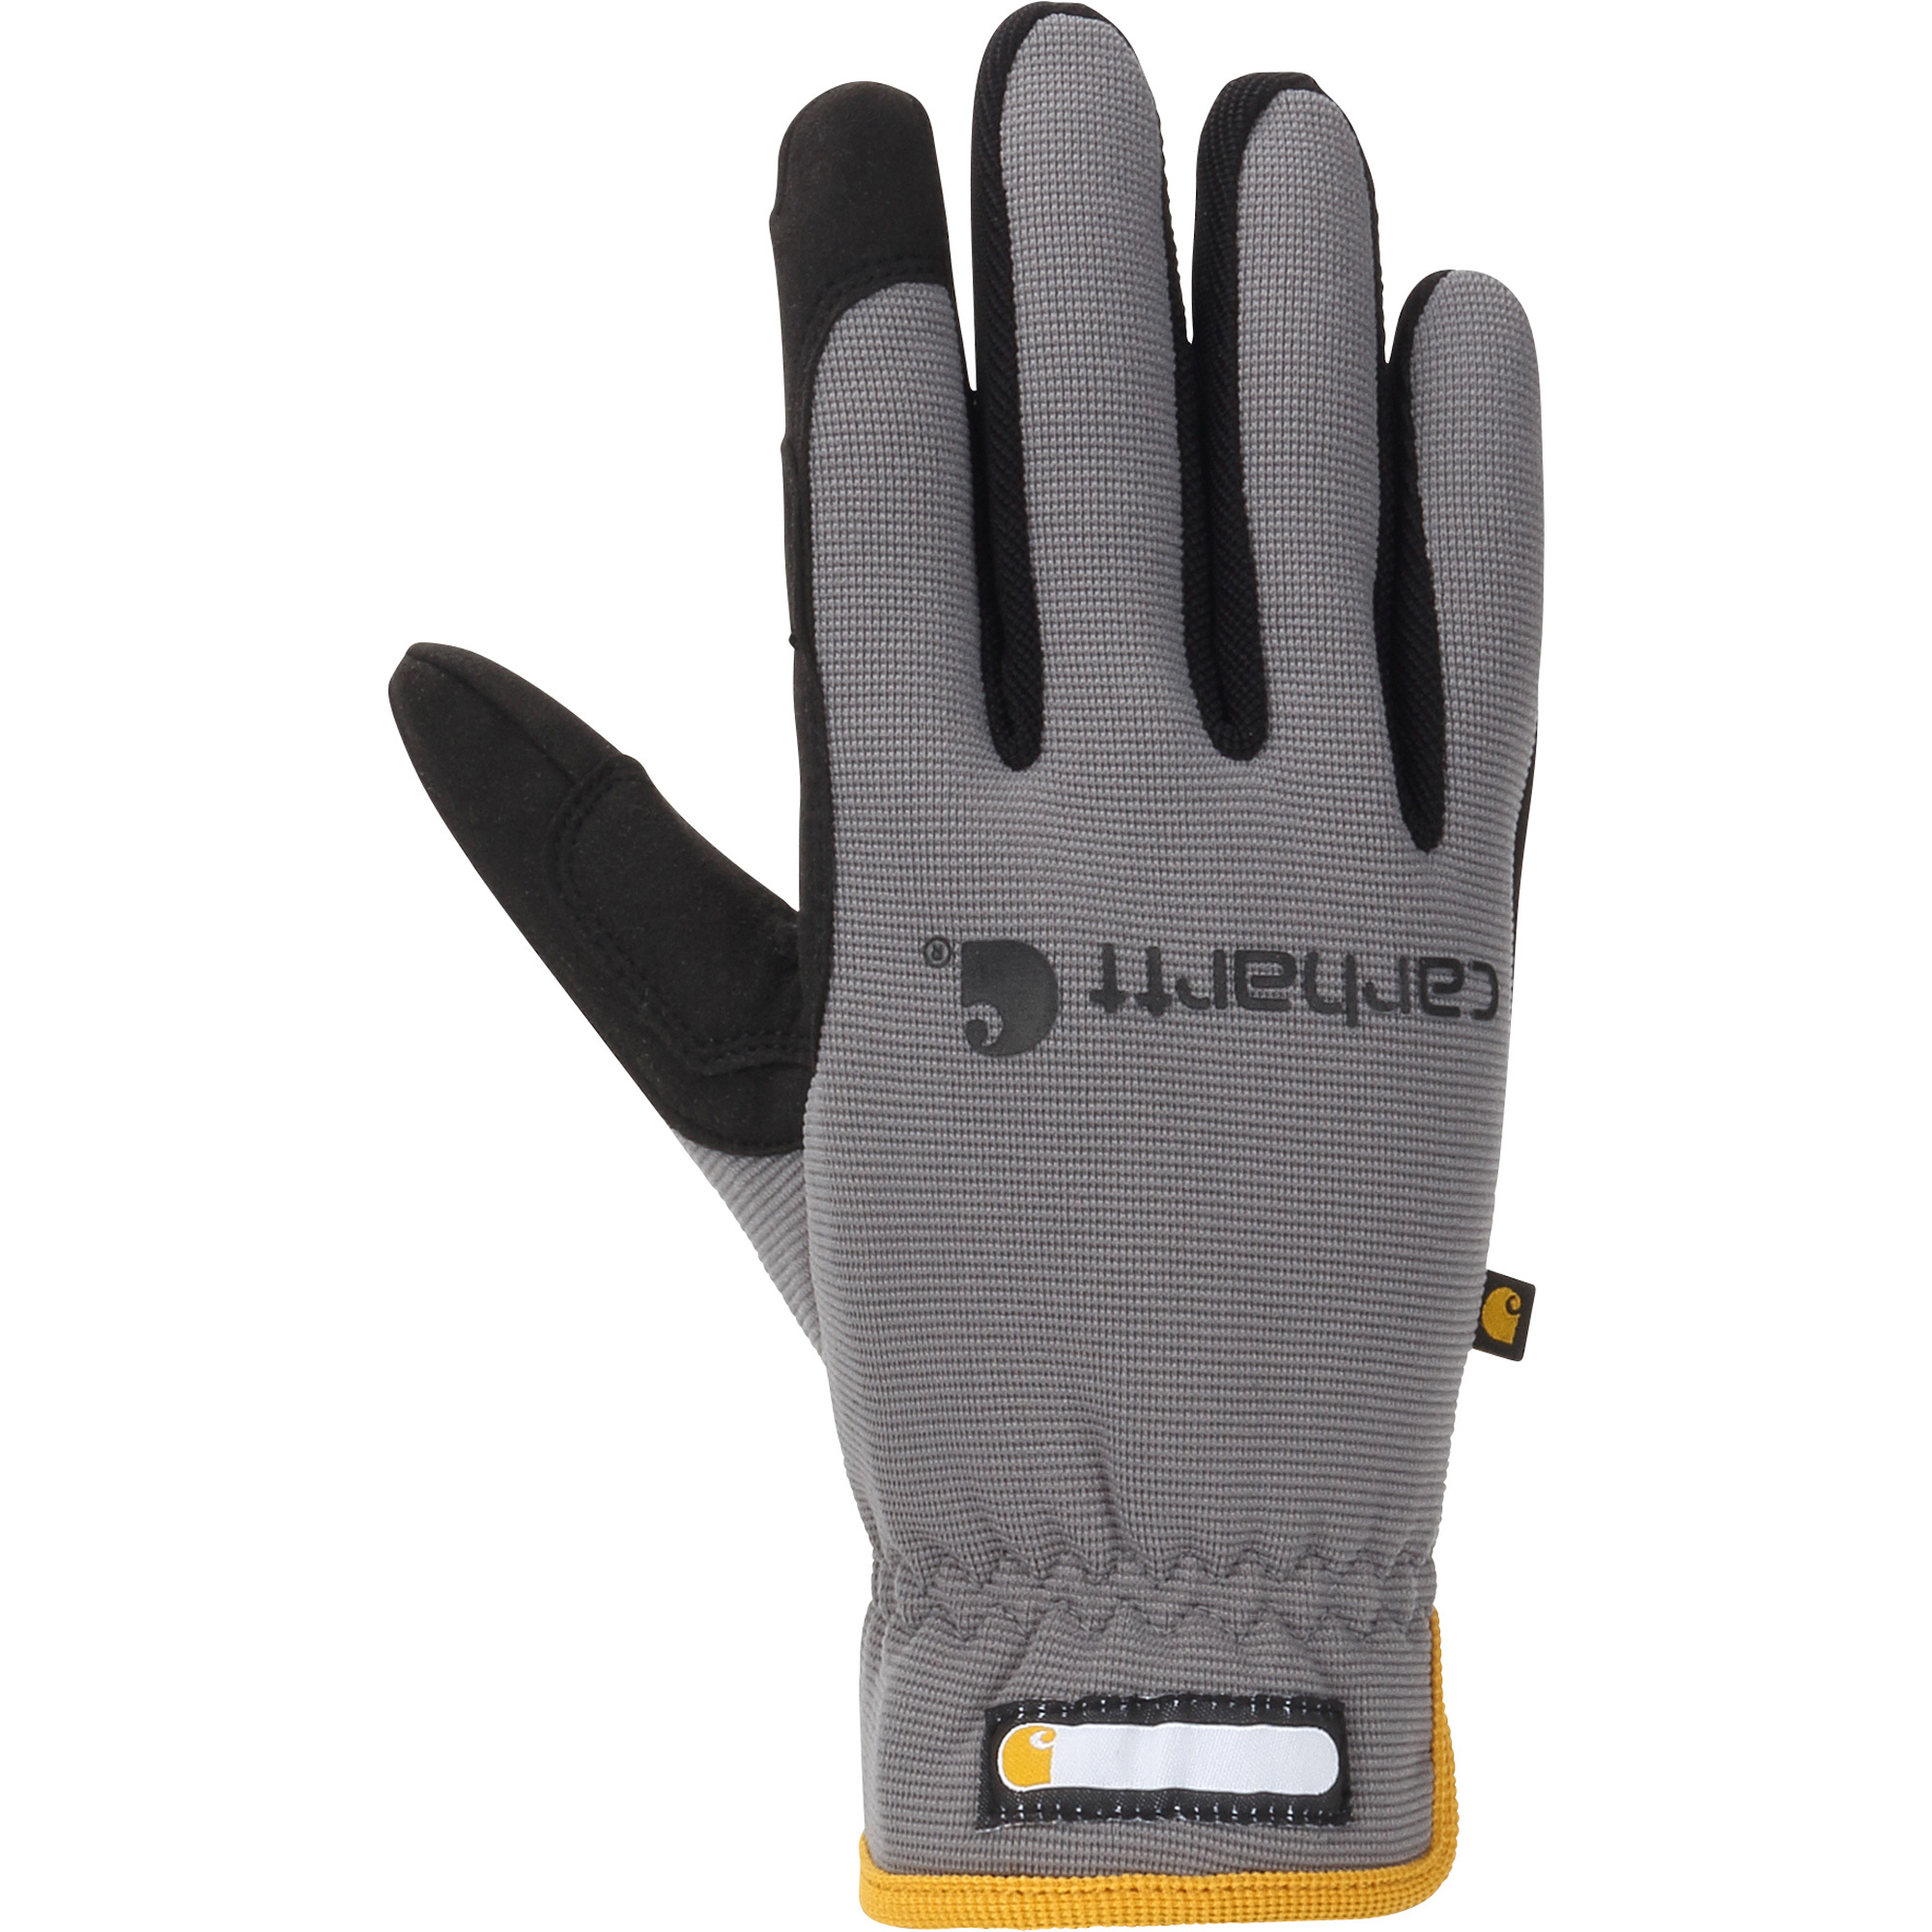 Carhartt Thermal-Lined High-Dexterity Open-Cuff Gloves â 1 Pair, Gray, XL, Model GD0547L-M XL